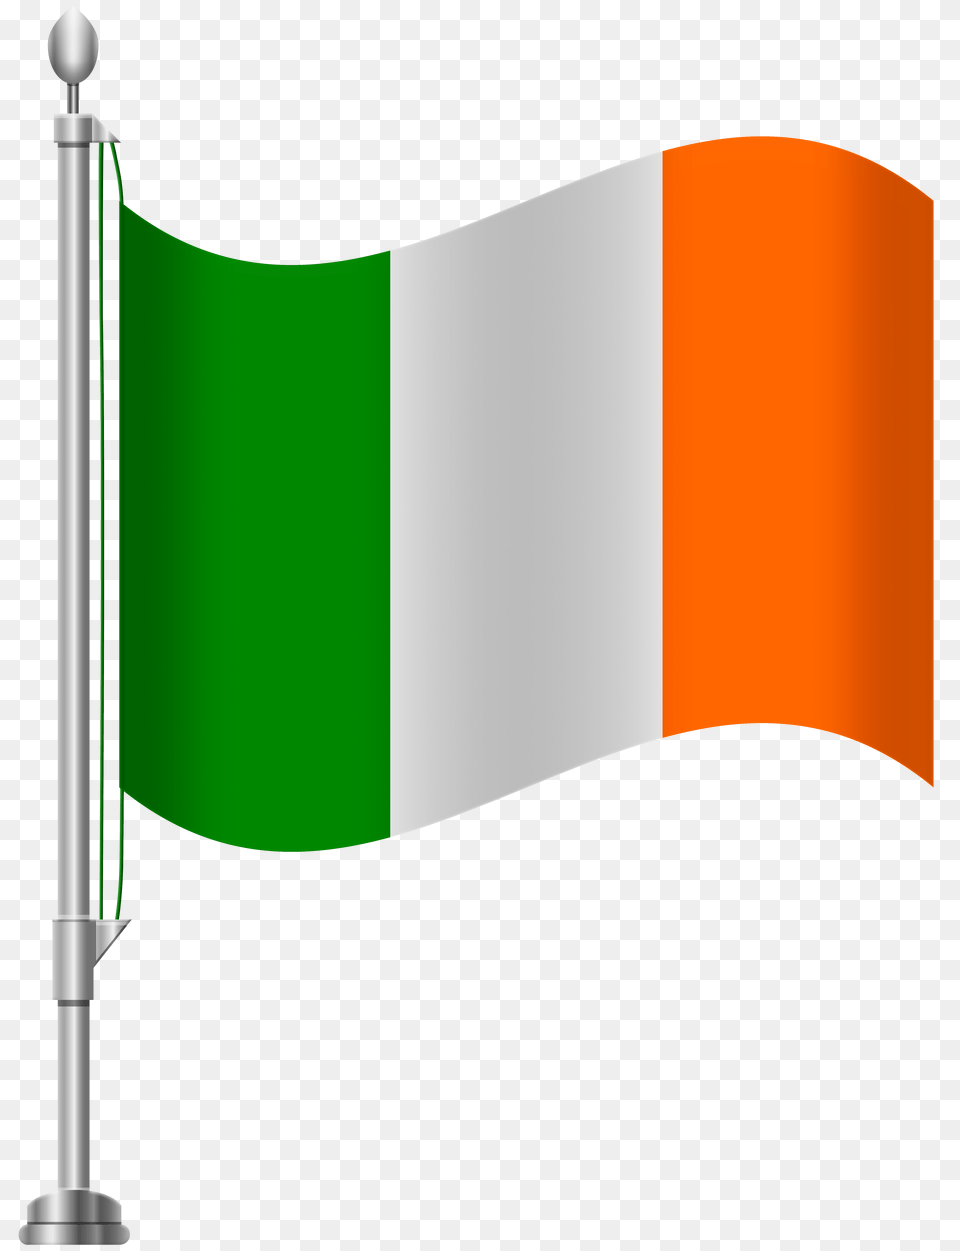 Ireland Flag Clip Art, Smoke Pipe, Ireland Flag Png Image